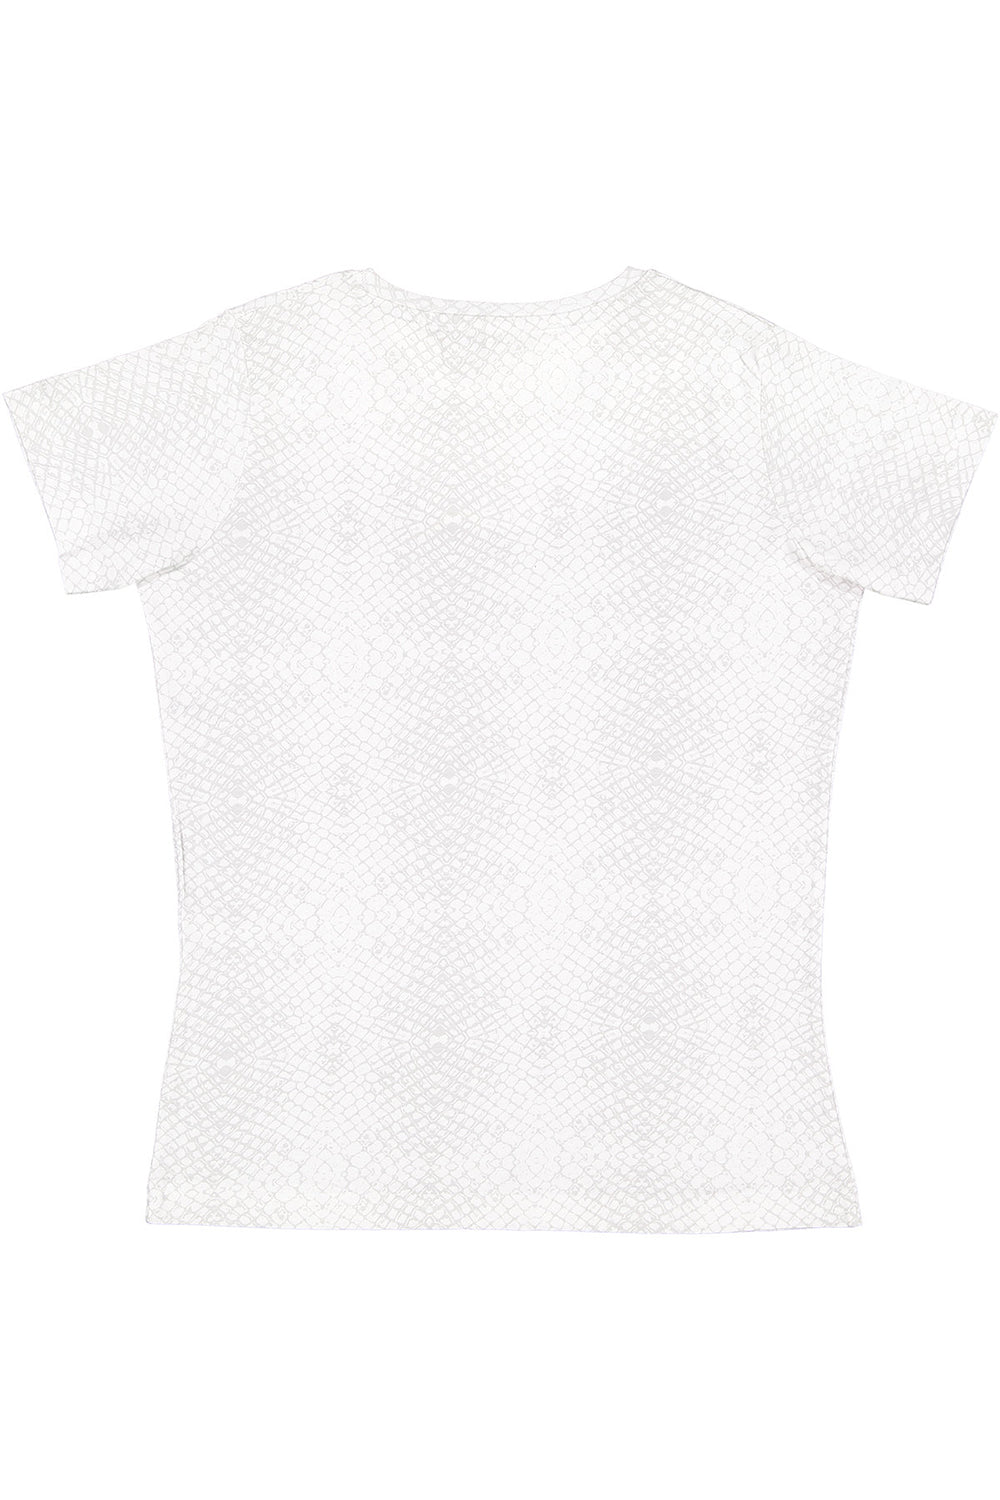 LAT 3516 Womens Fine Jersey Short Sleeve Crewneck T-Shirt White Reptile Flat Back